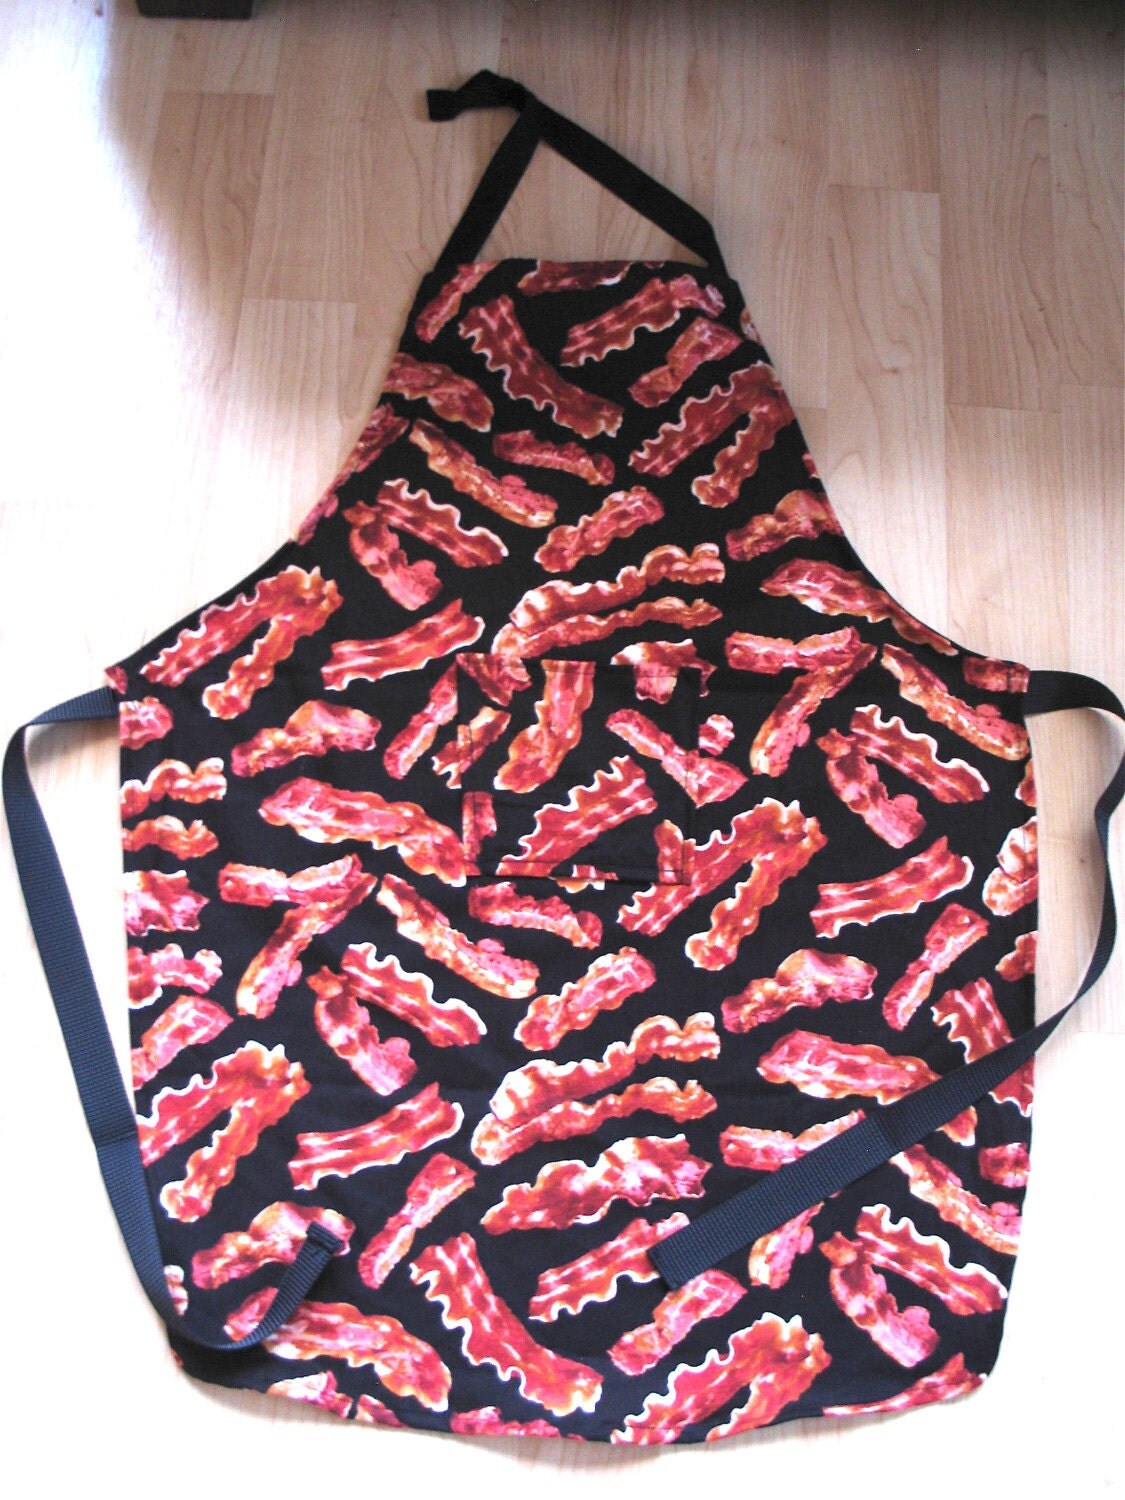 Bacon Fabric